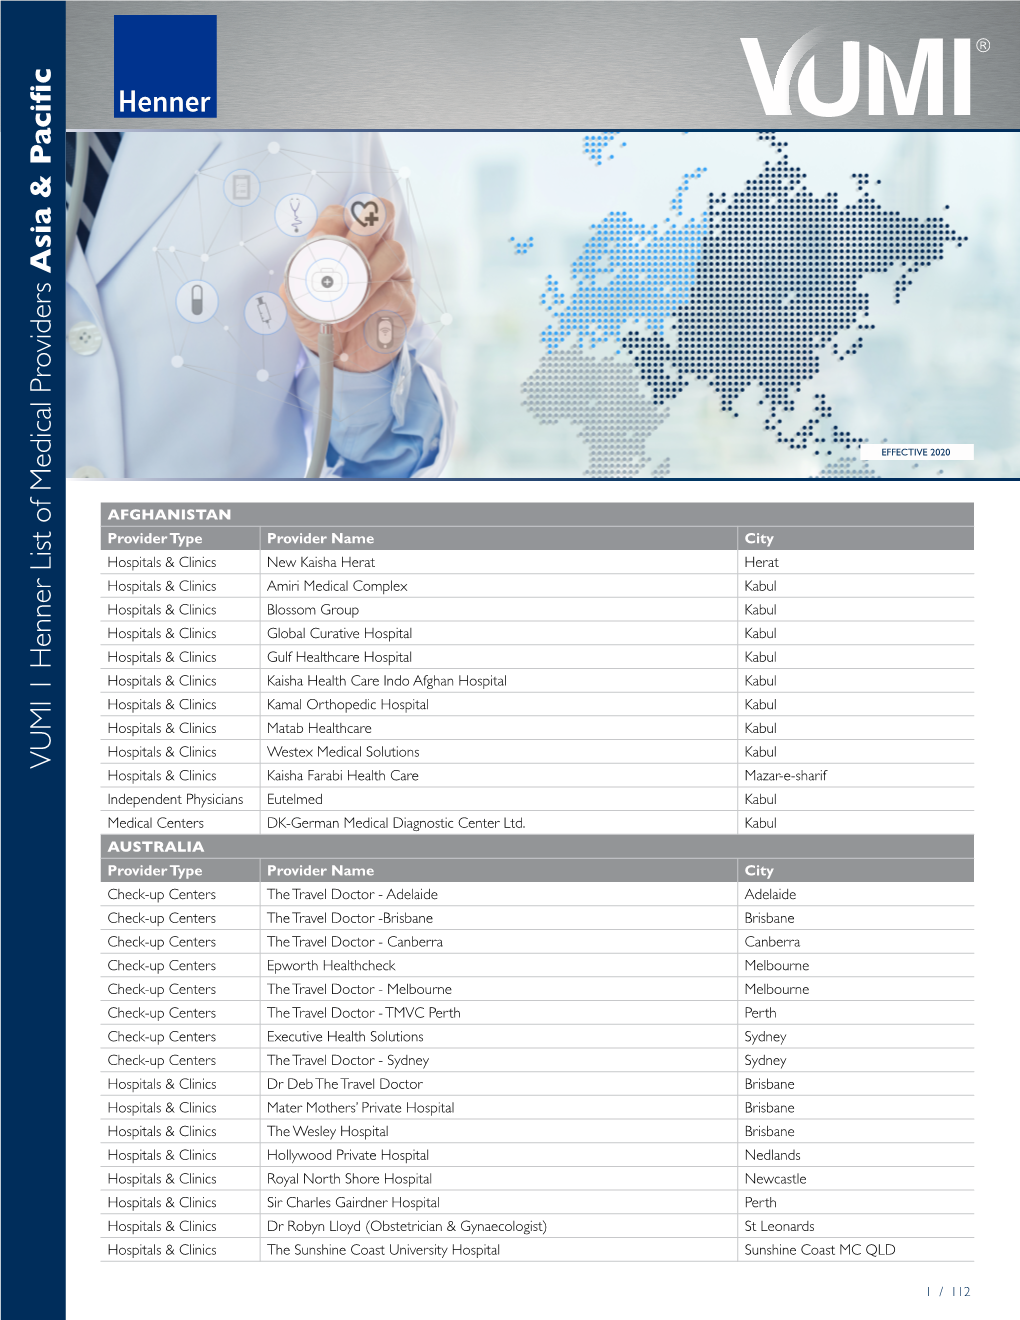 VUMI 1 Henner List of Medical Providers Asia & P Acific